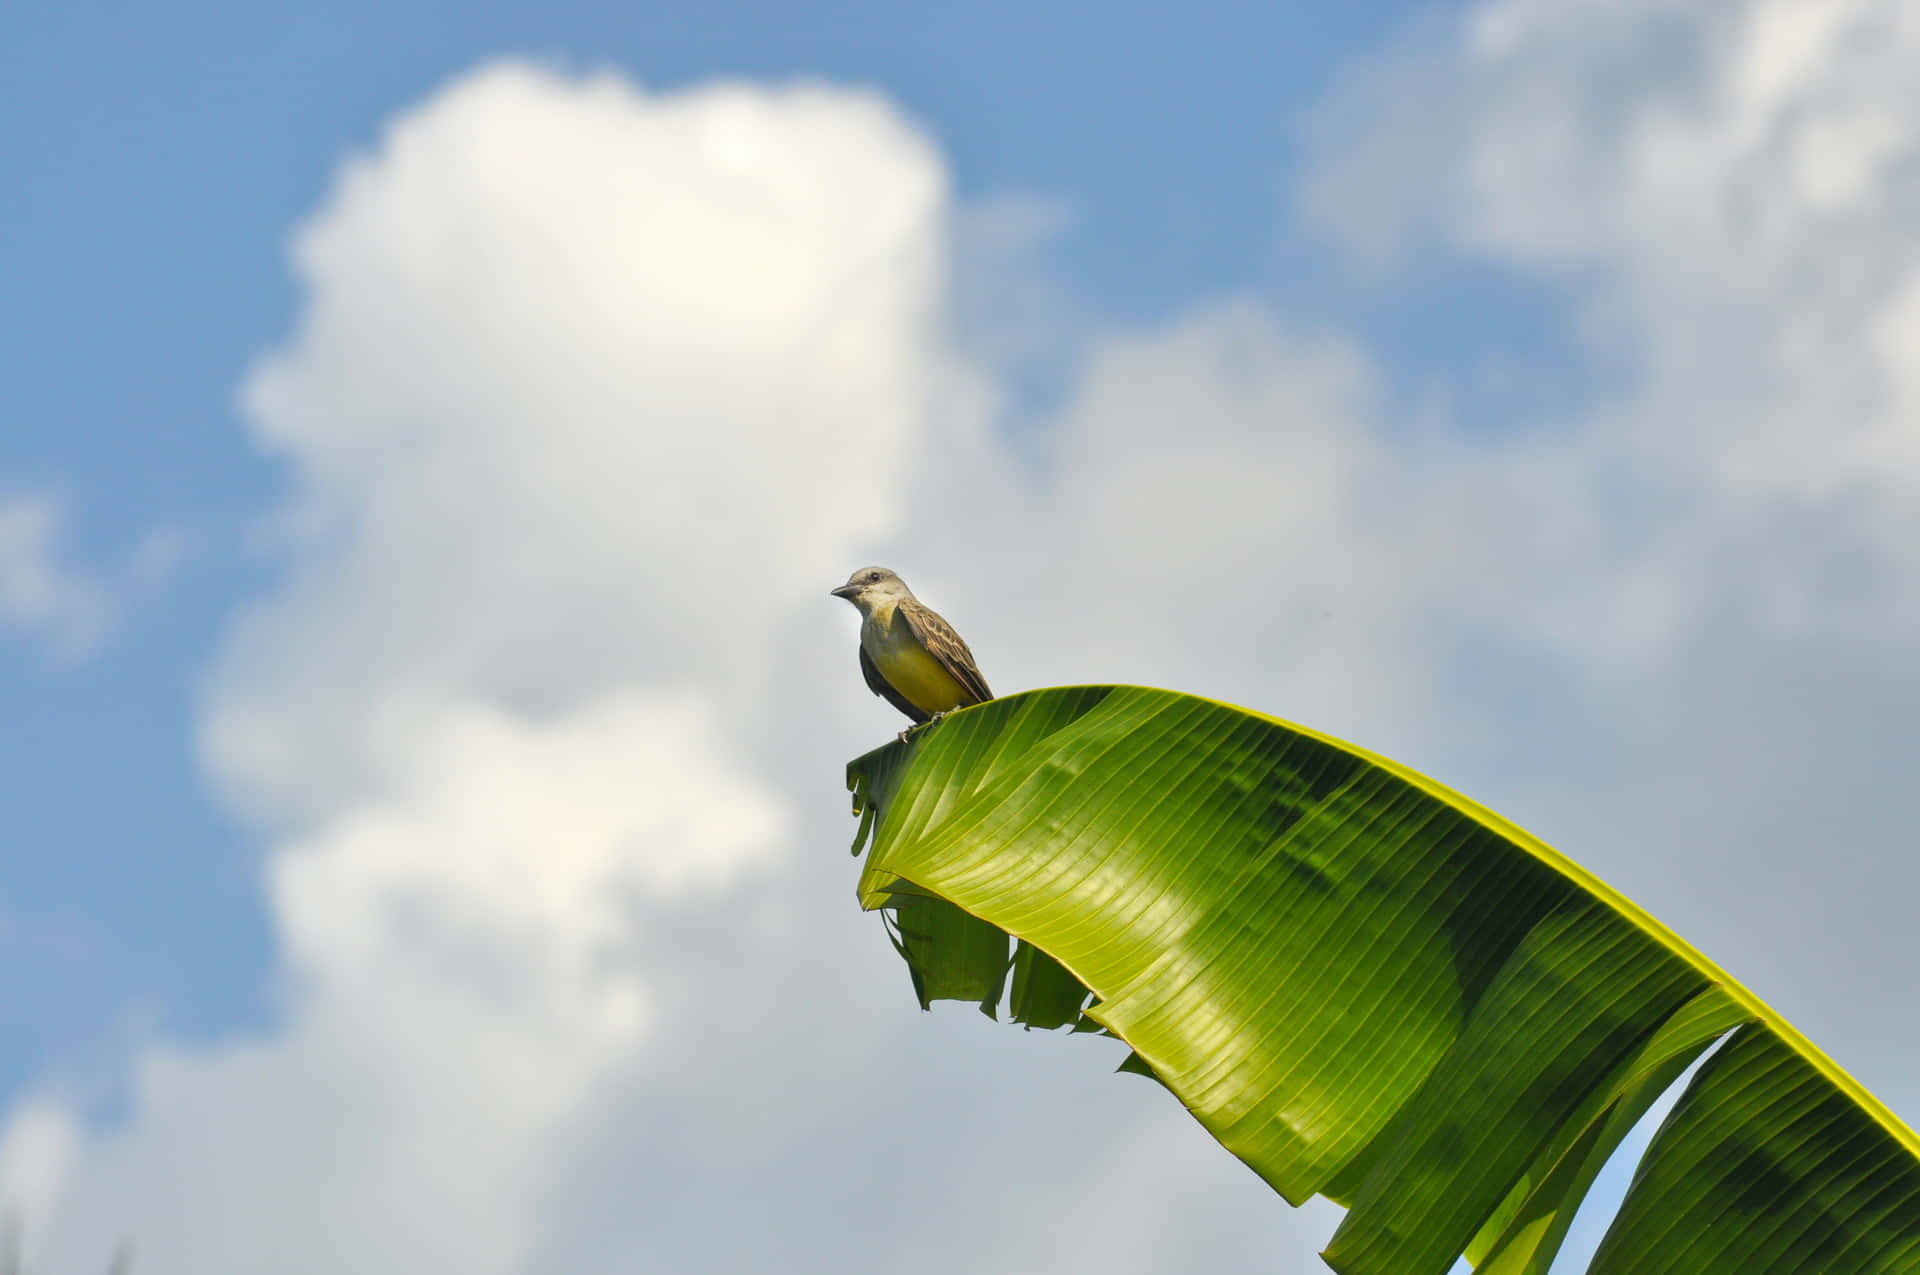 “A beautiful backdrop – a vibrant banana leaf.”